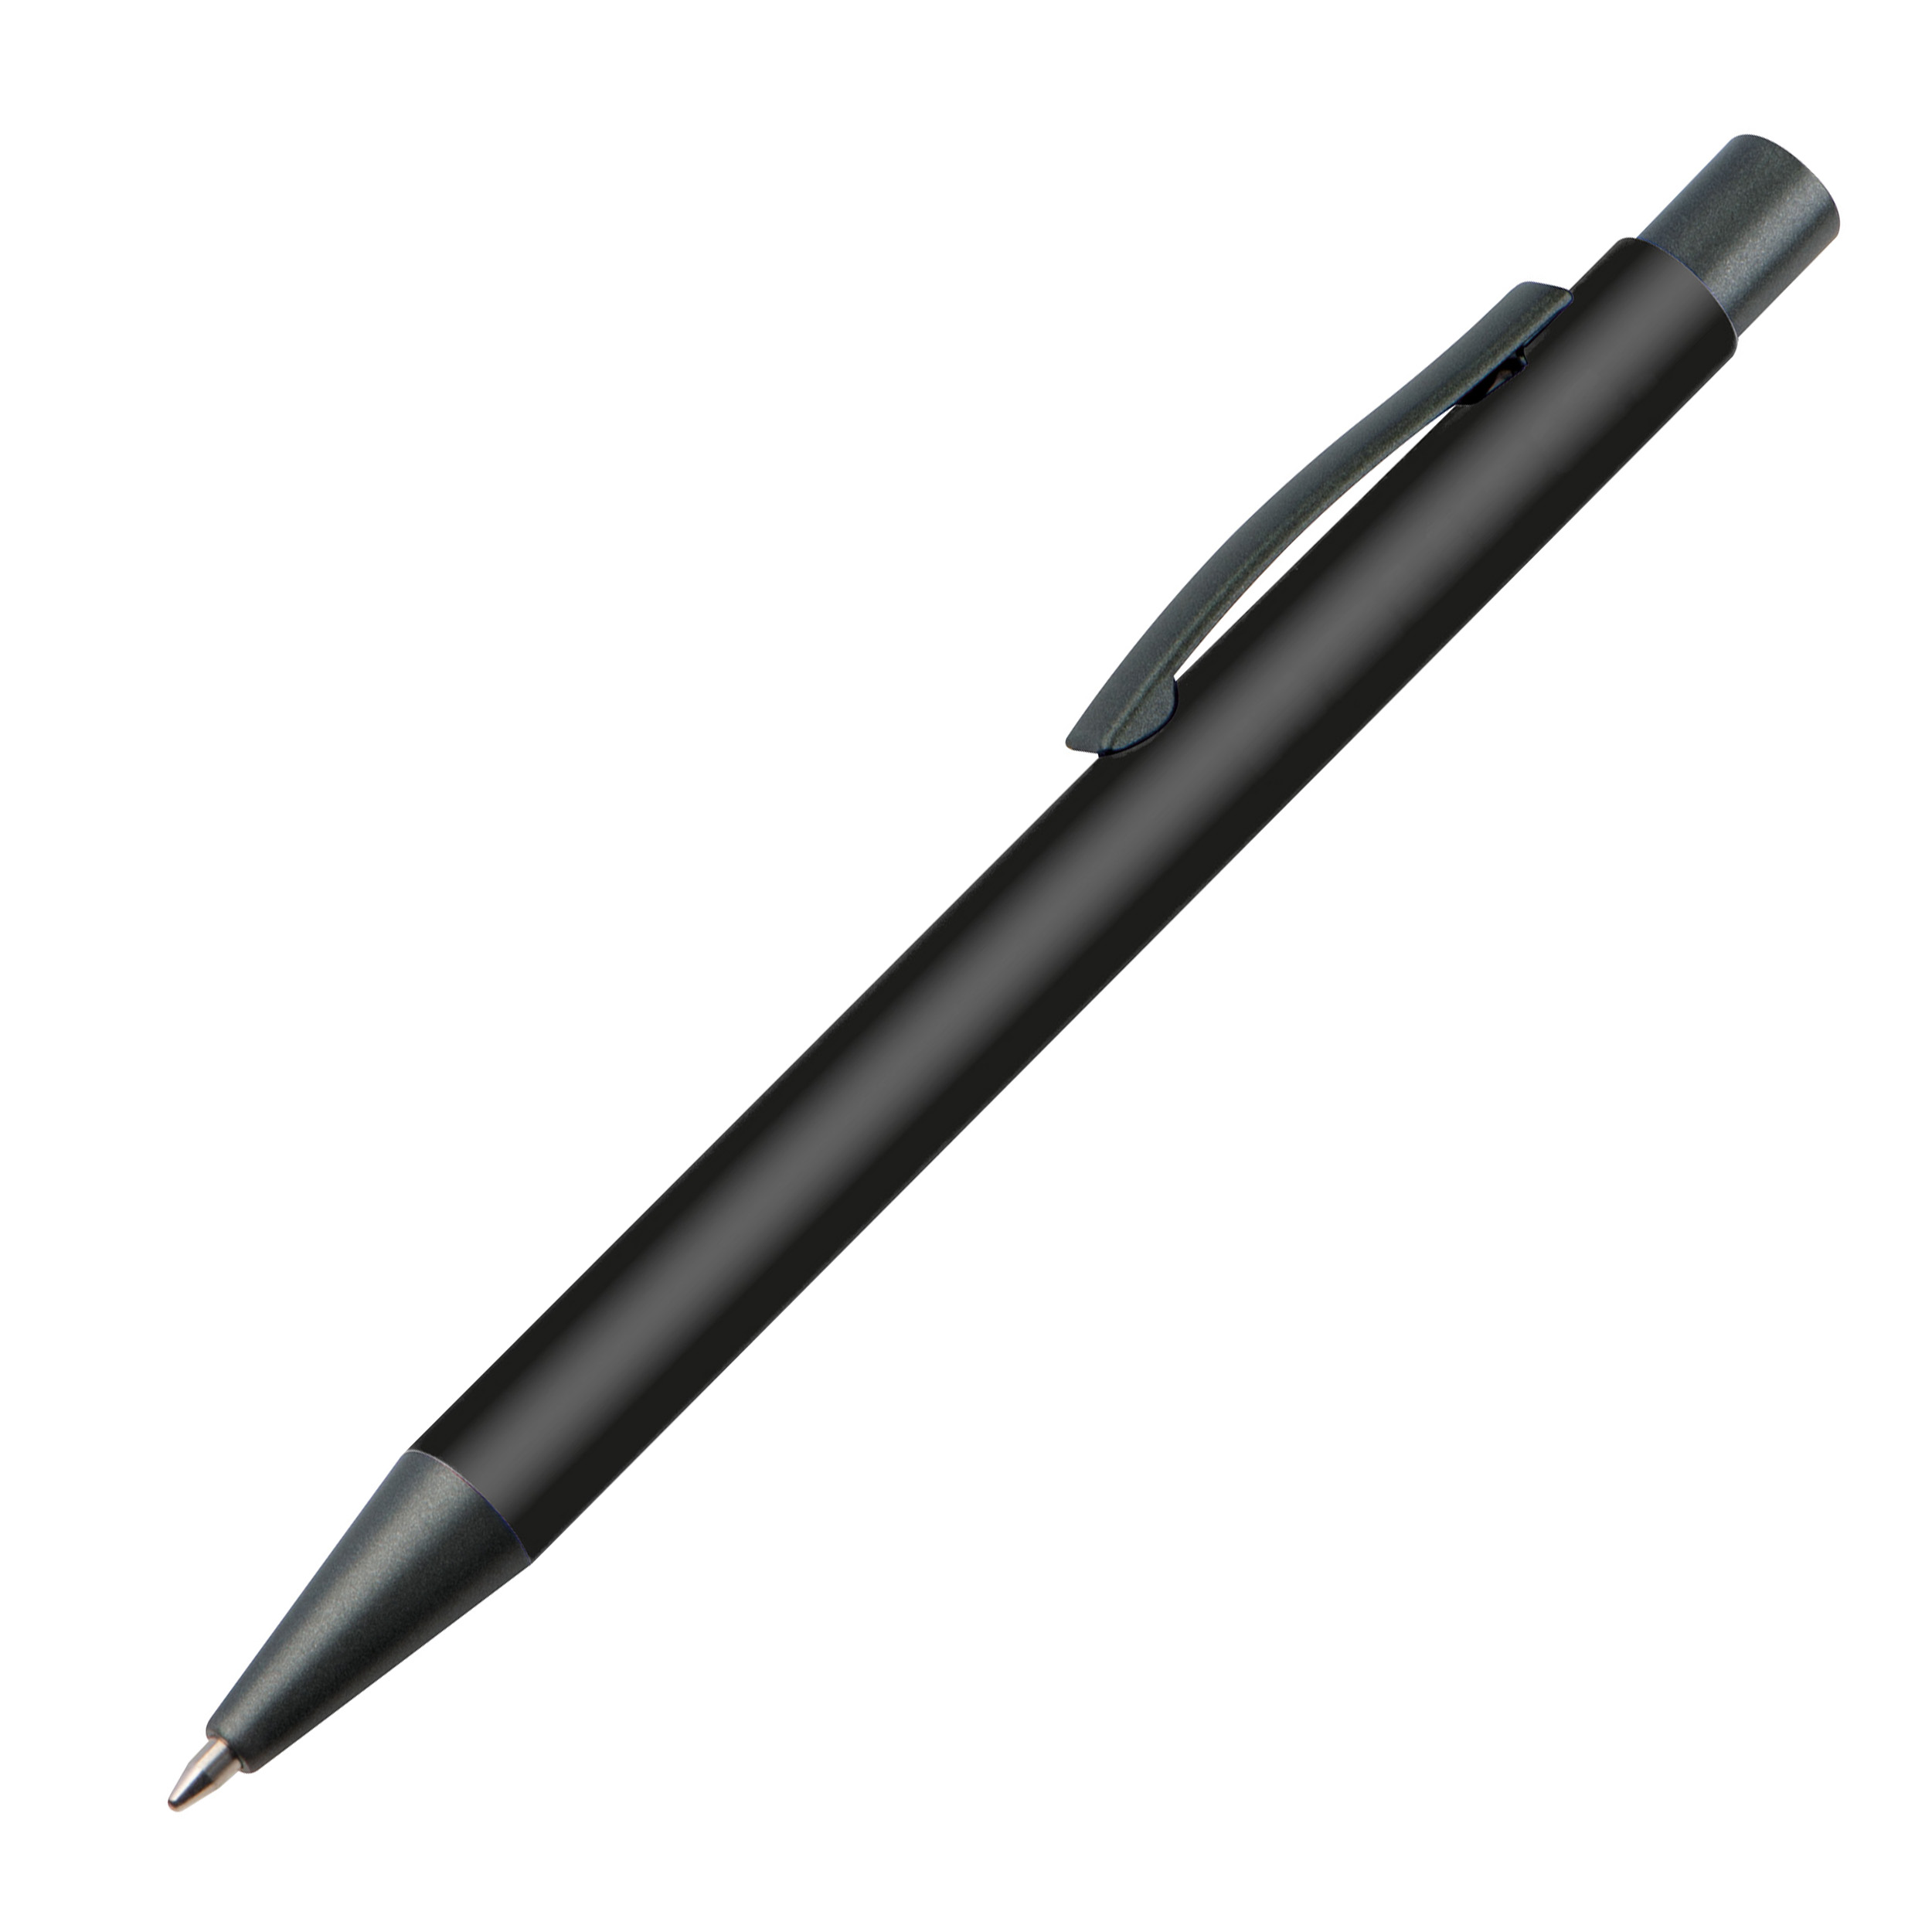 Plastic ballpoint pen with metal clip